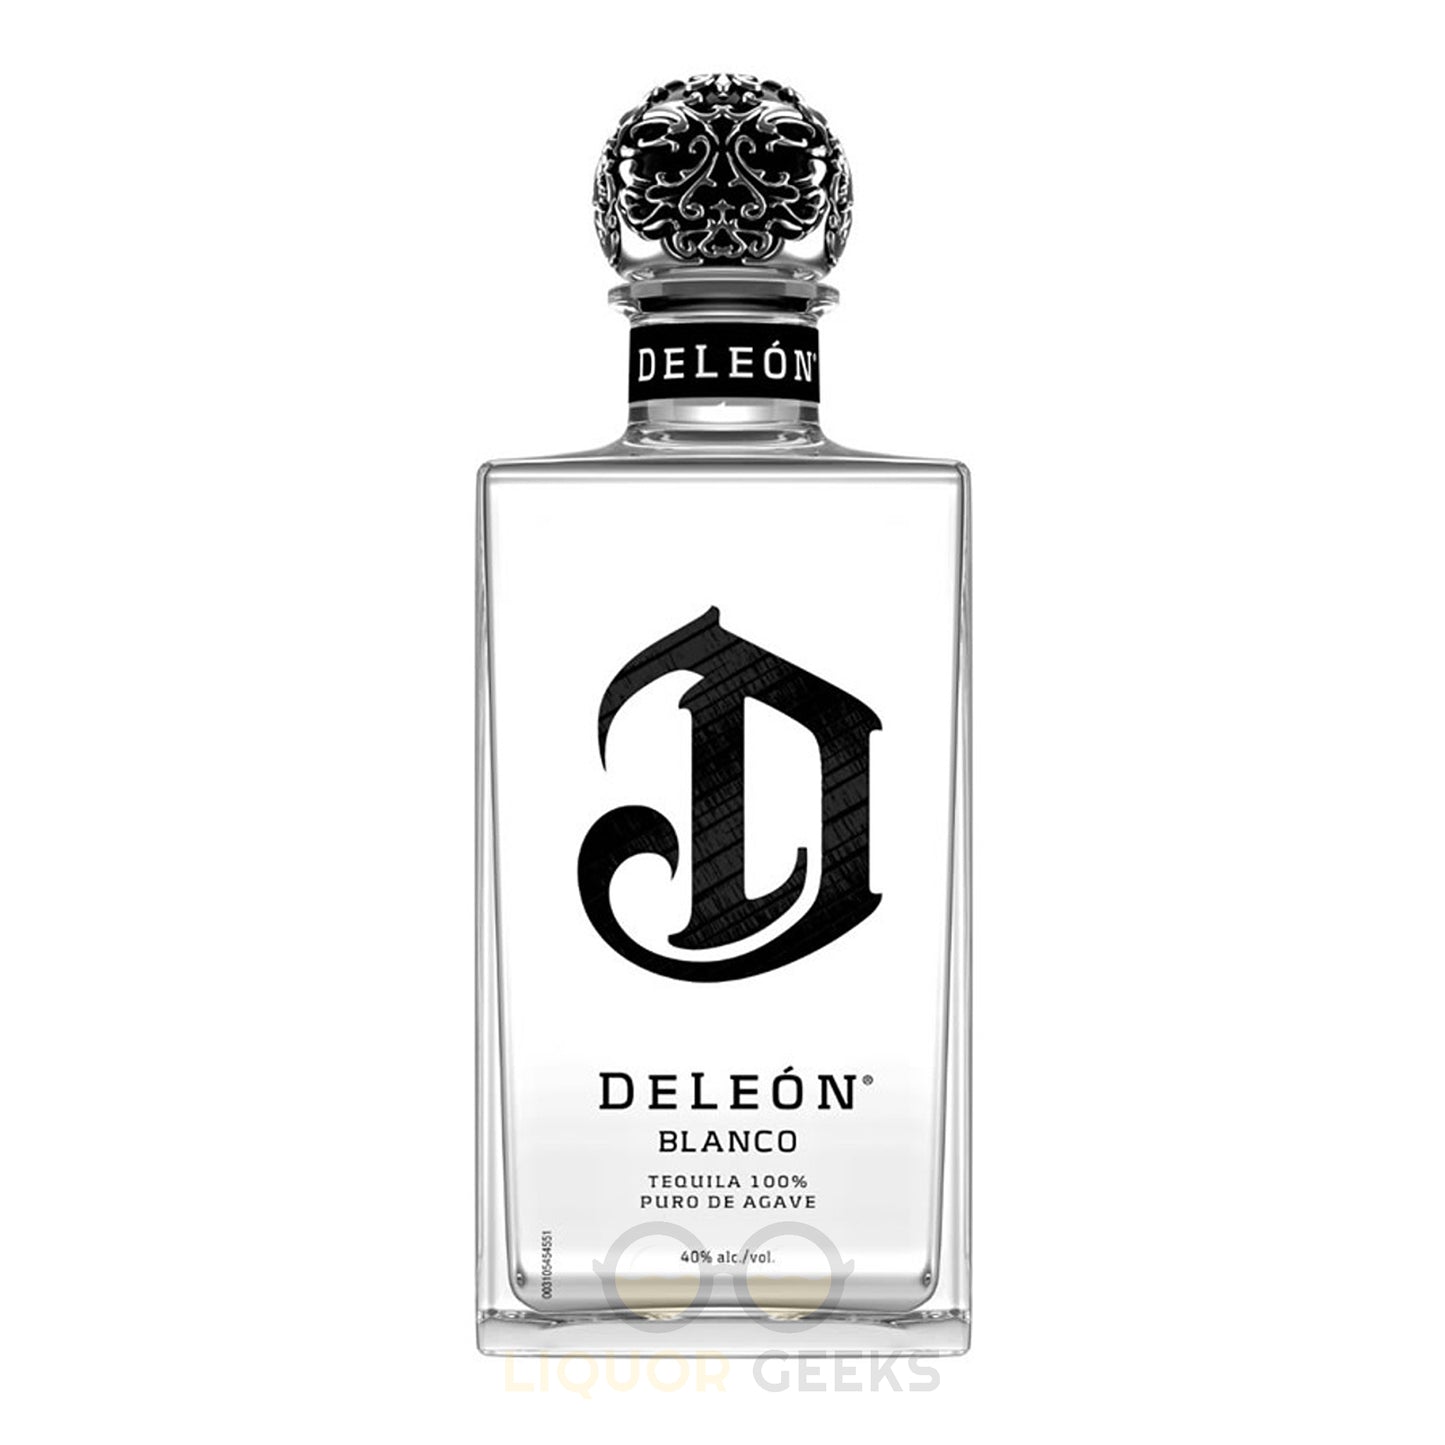 Deleon Blanco Tequila - Liquor Geeks